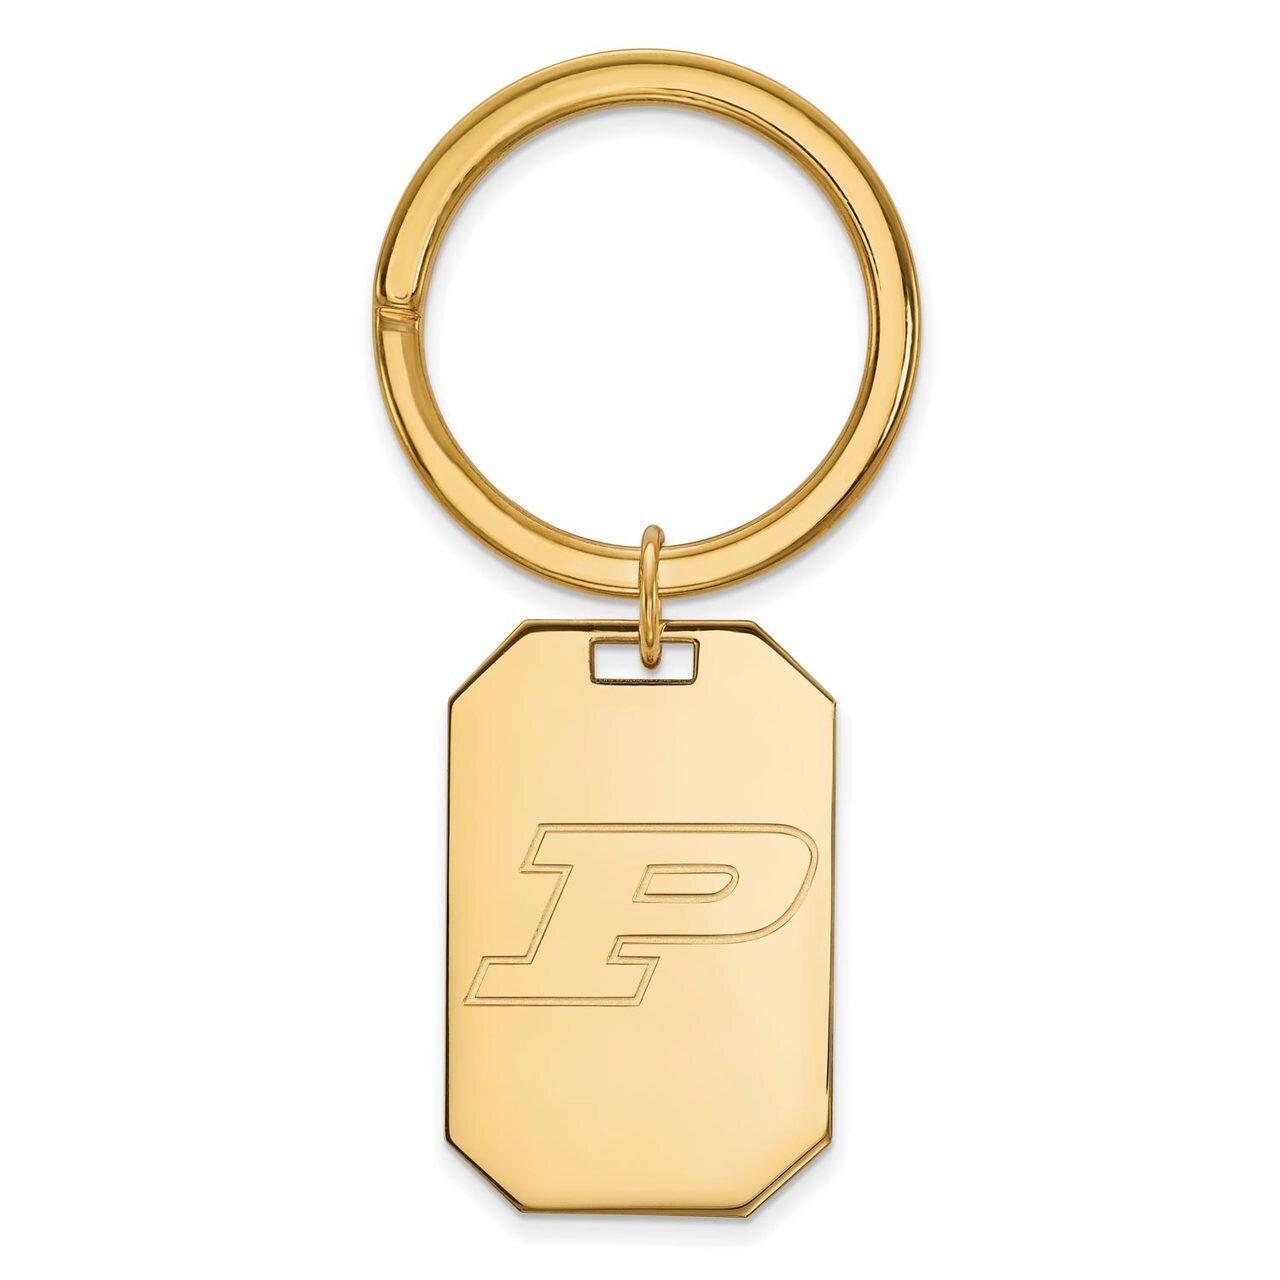 Purdue Key Chain Gold-plated Silver GP021PU